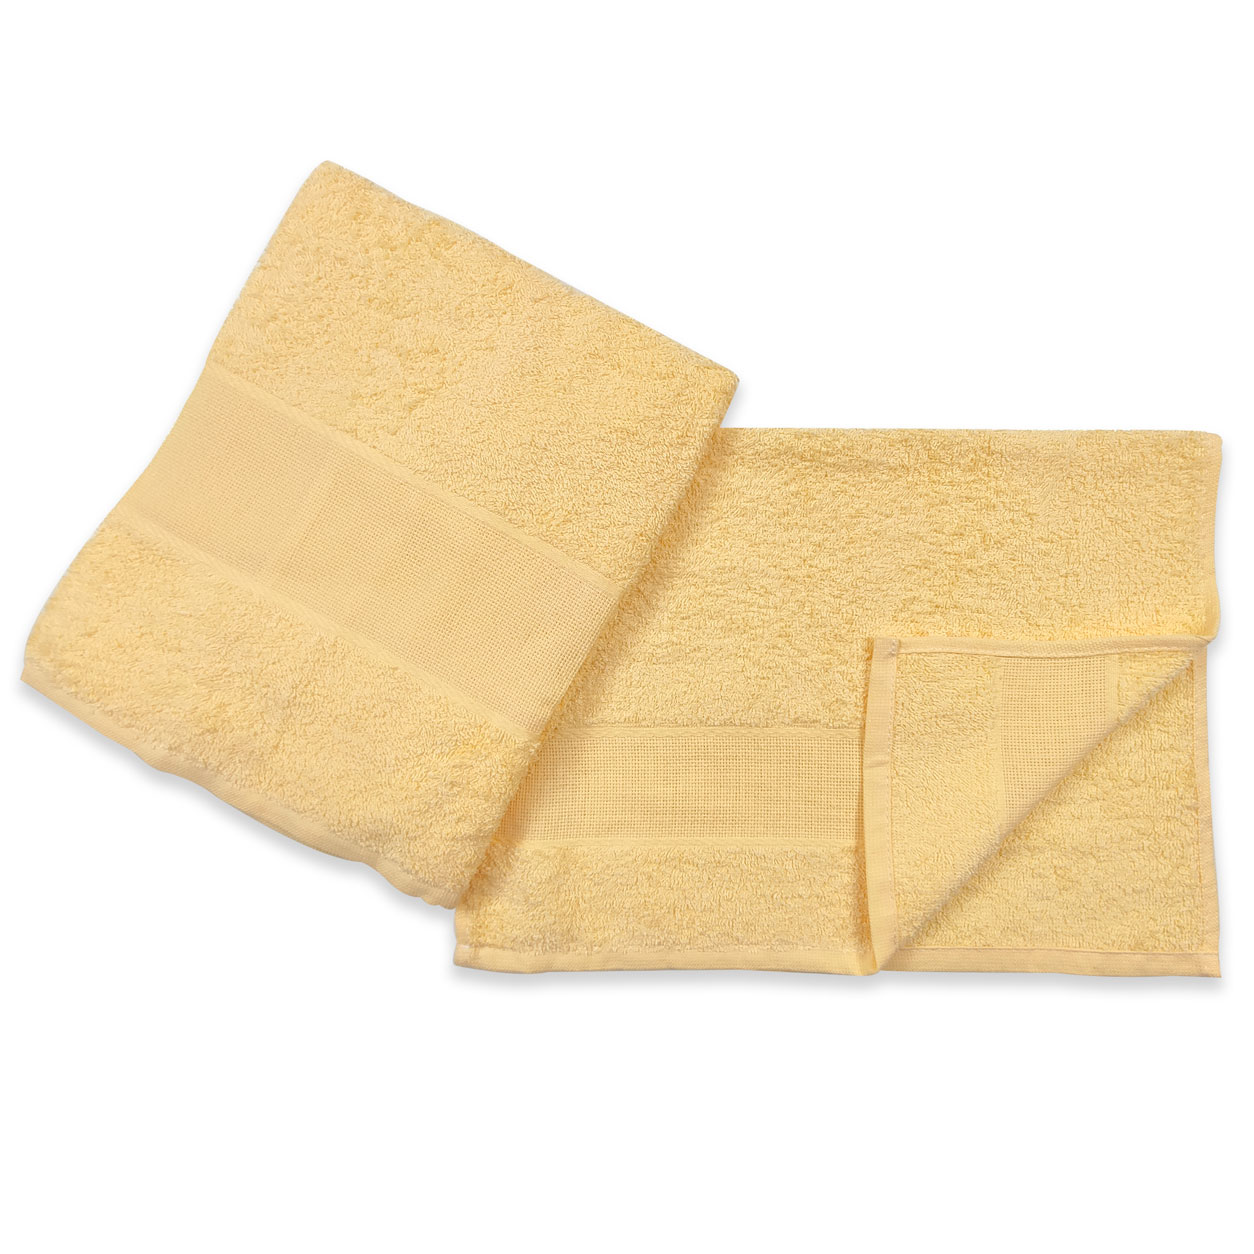 coppiola-asciugamani-gialli